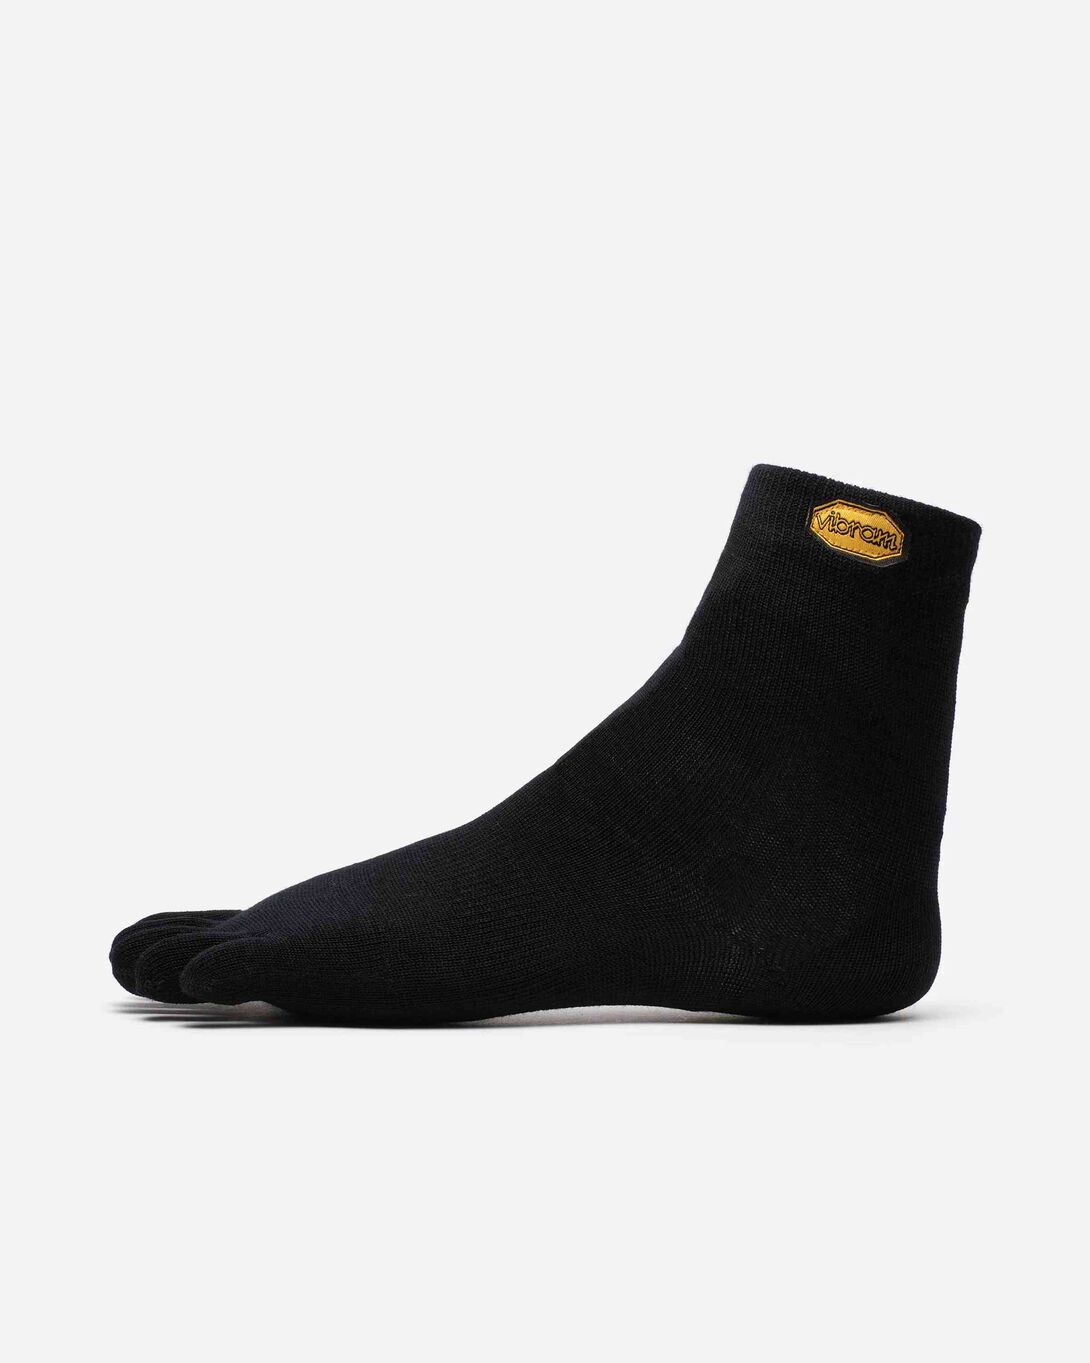 B&M Caiman BER116 Five Toe Socks